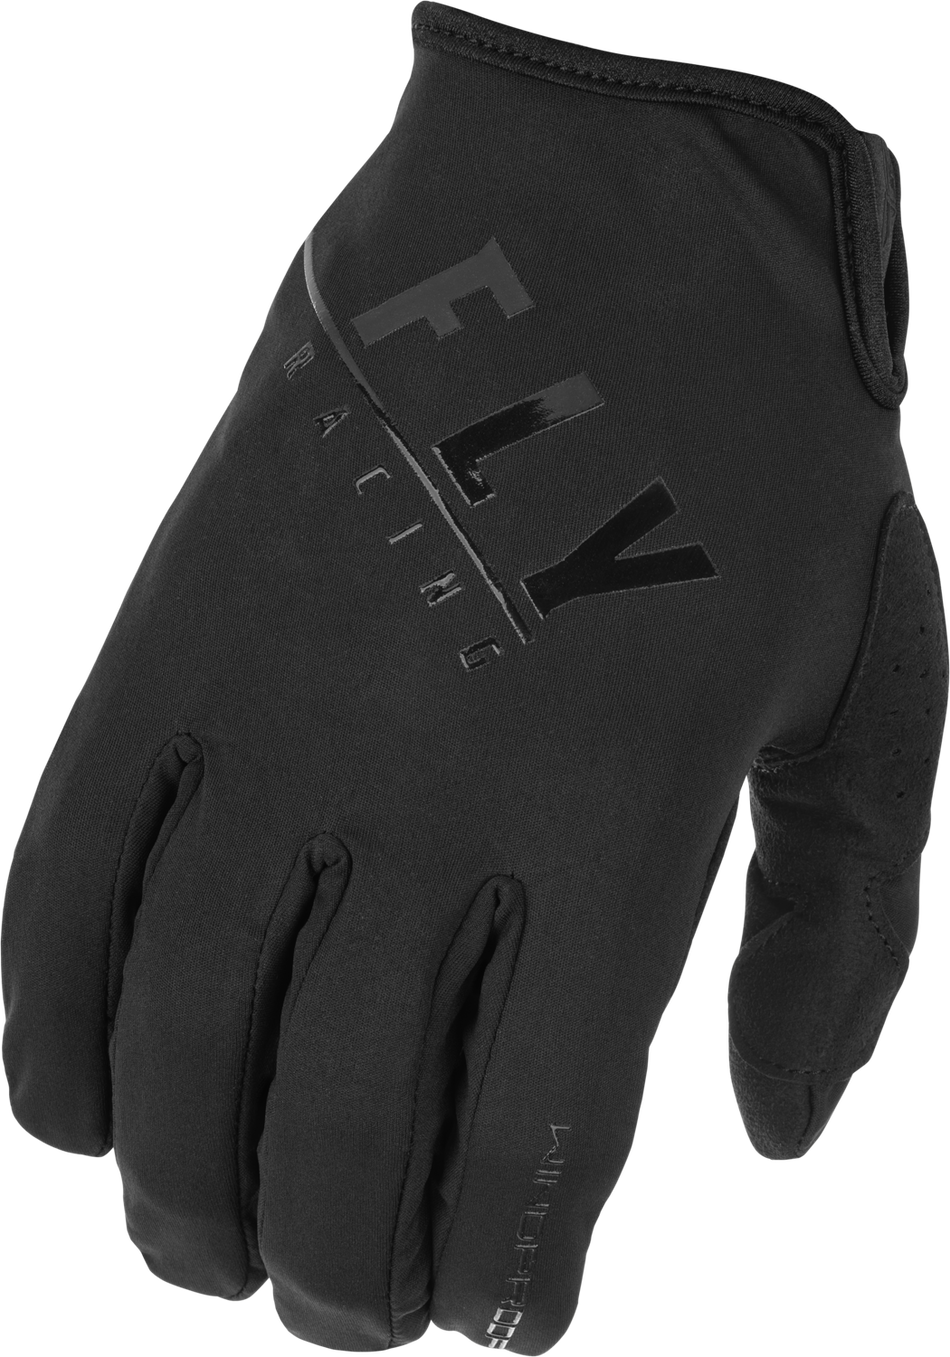 FLY RACING Windproof Gloves Black Sz 13 371-14113